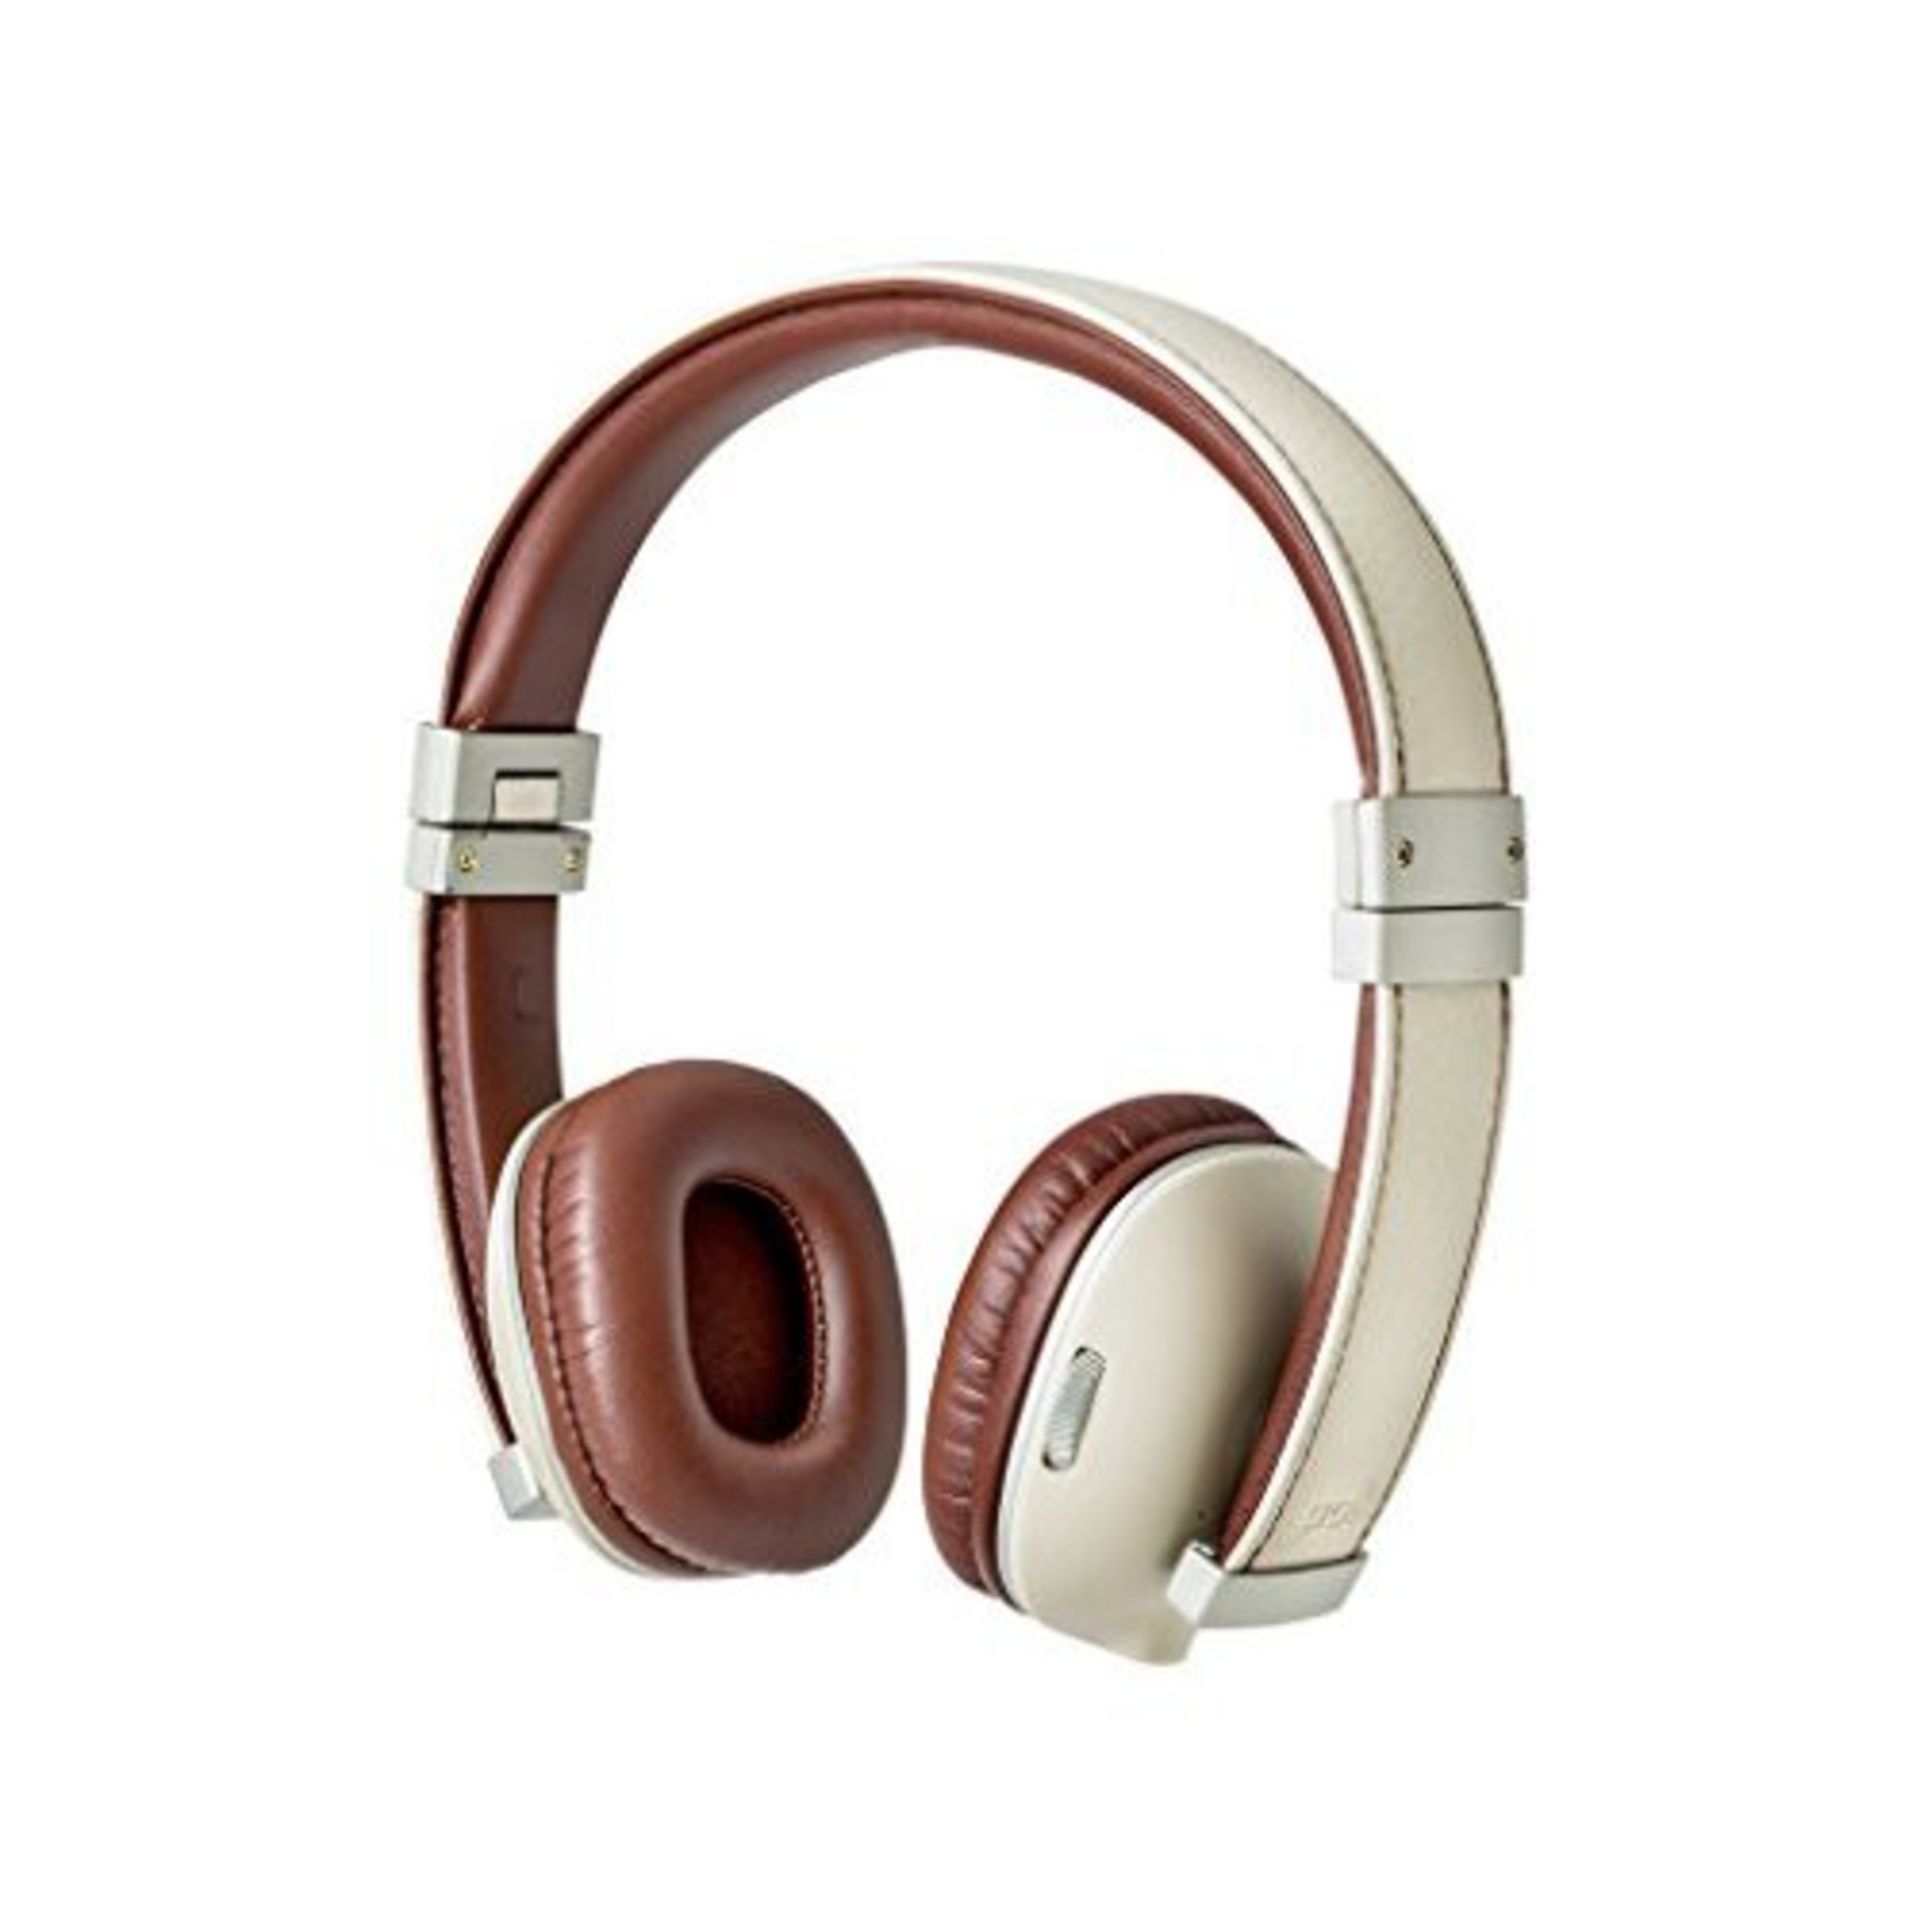 V *TRADE QTY* Brand New Polk Hinge Wireless On-Ear Headphones With Bluetooth - High Quality